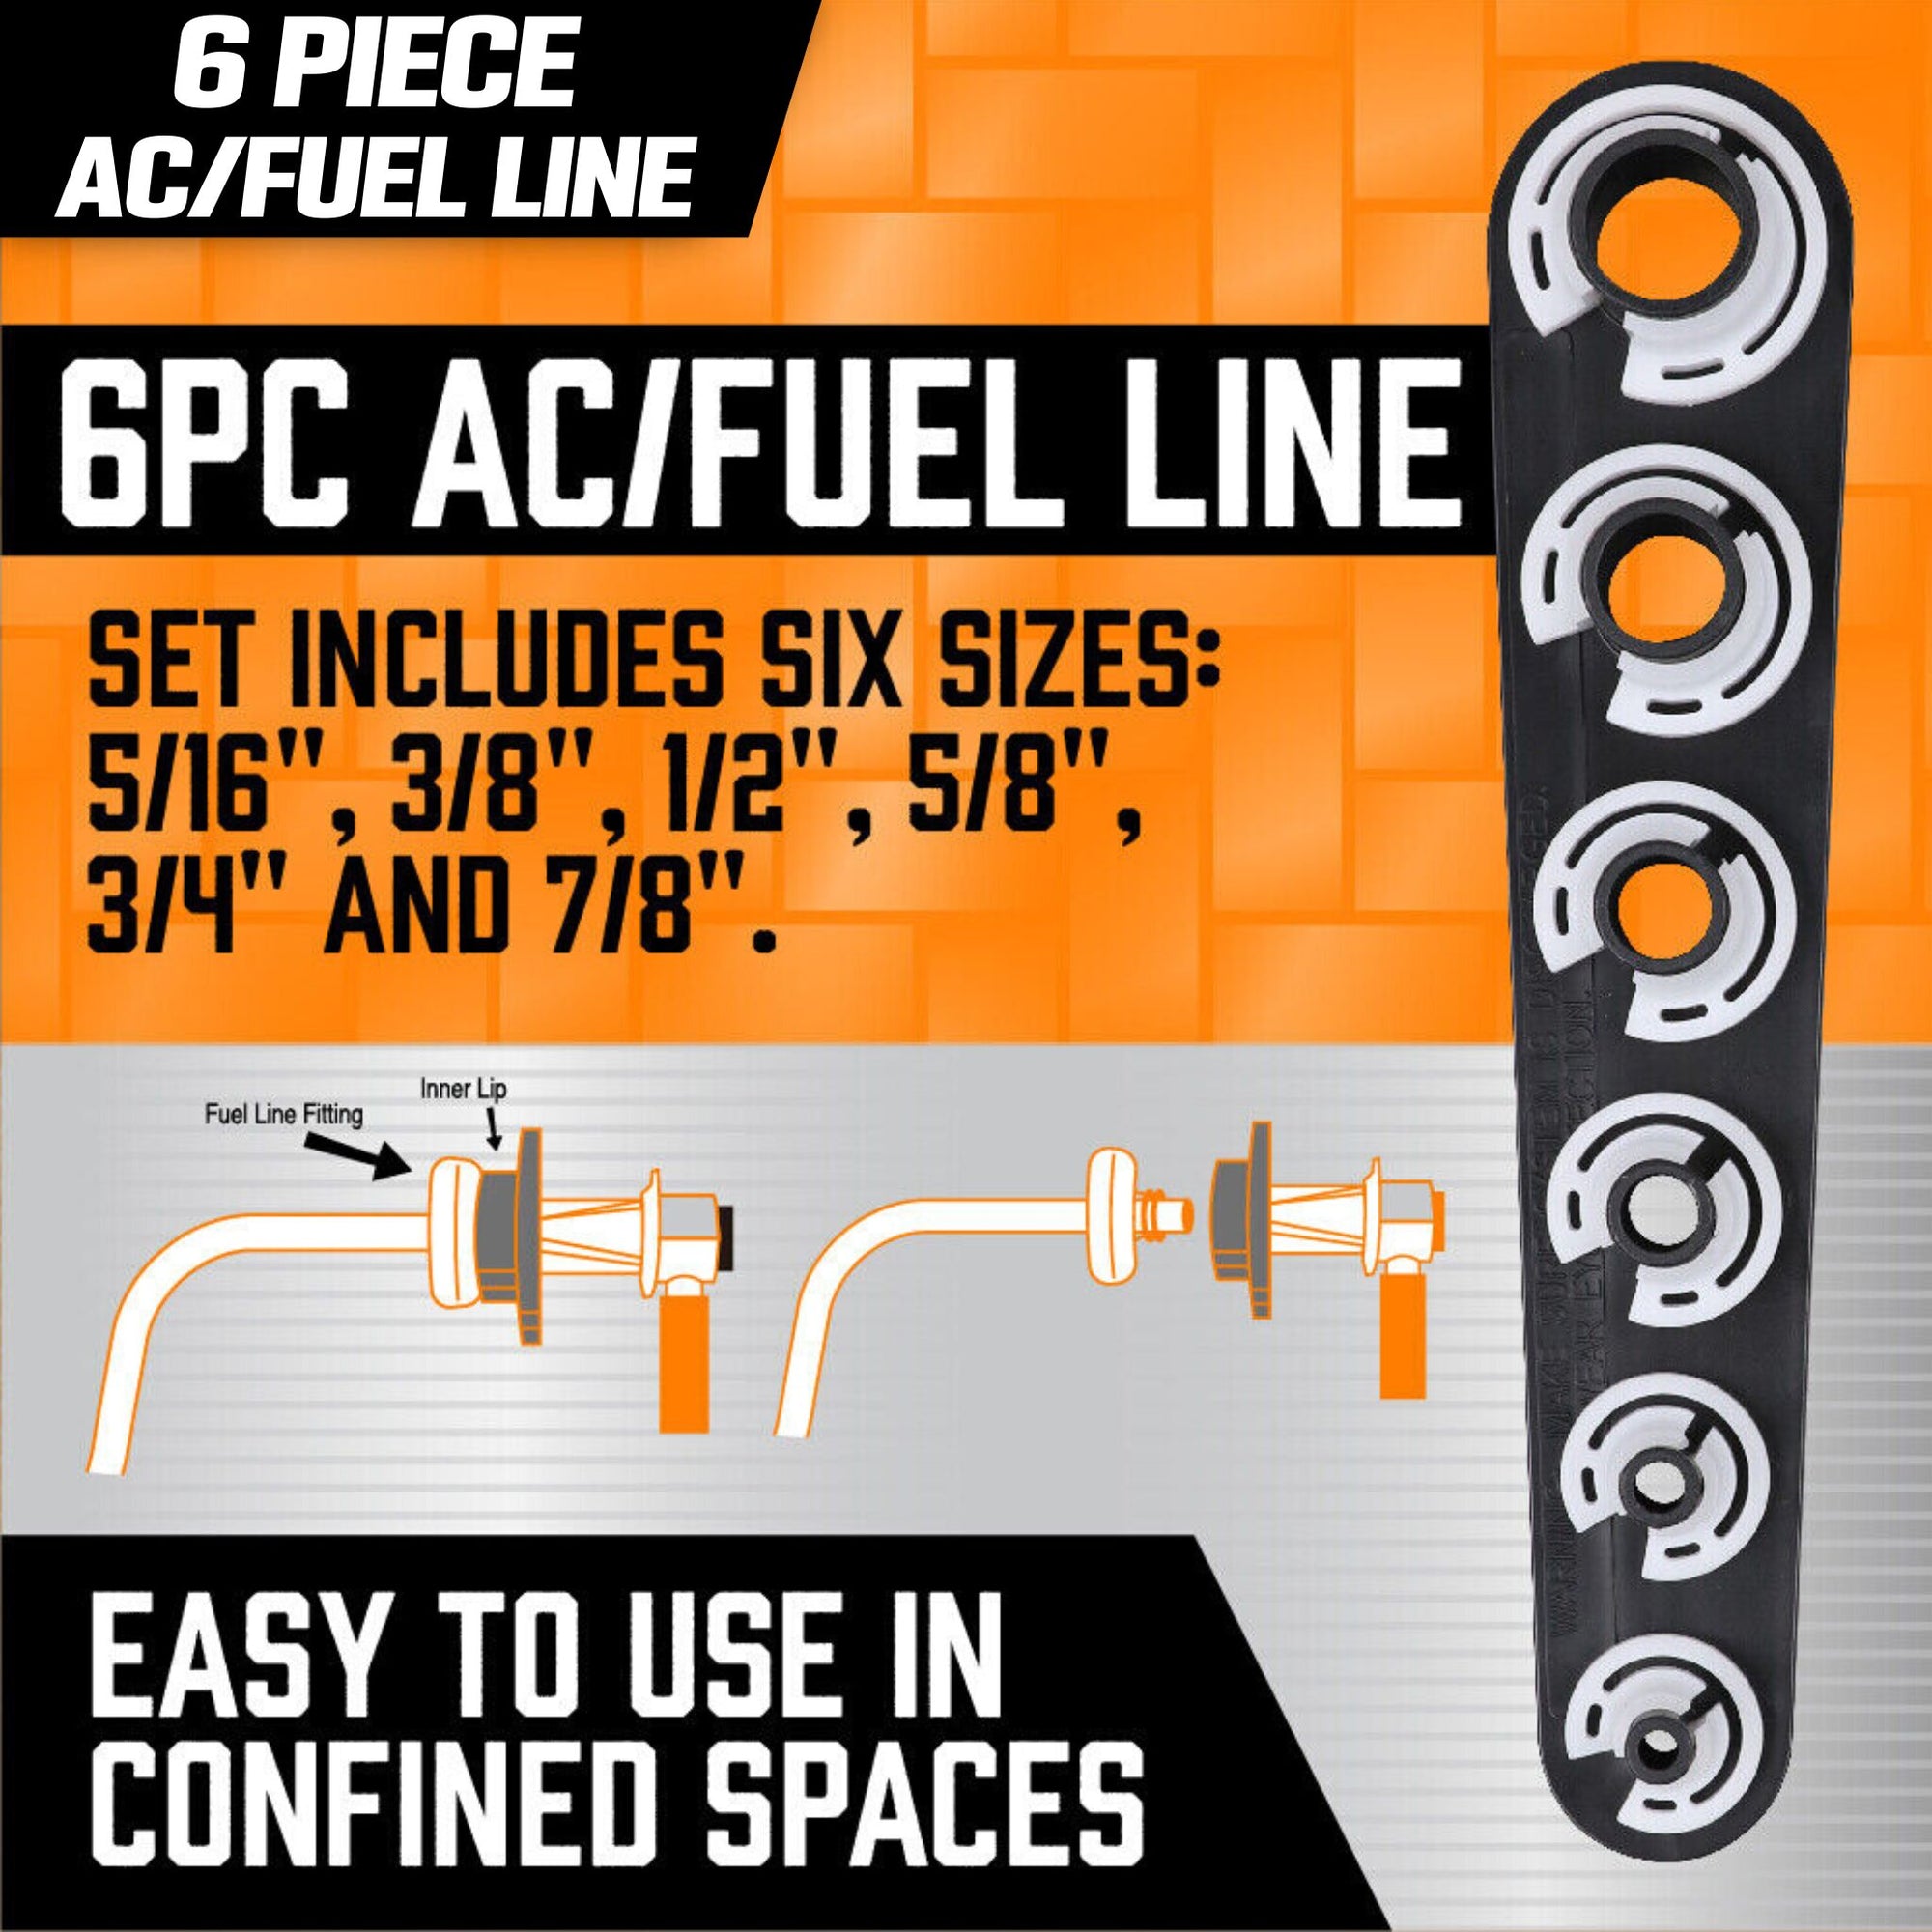 6 Piece AC / Fuel Line Disconnect Set - South East Clearance Centre